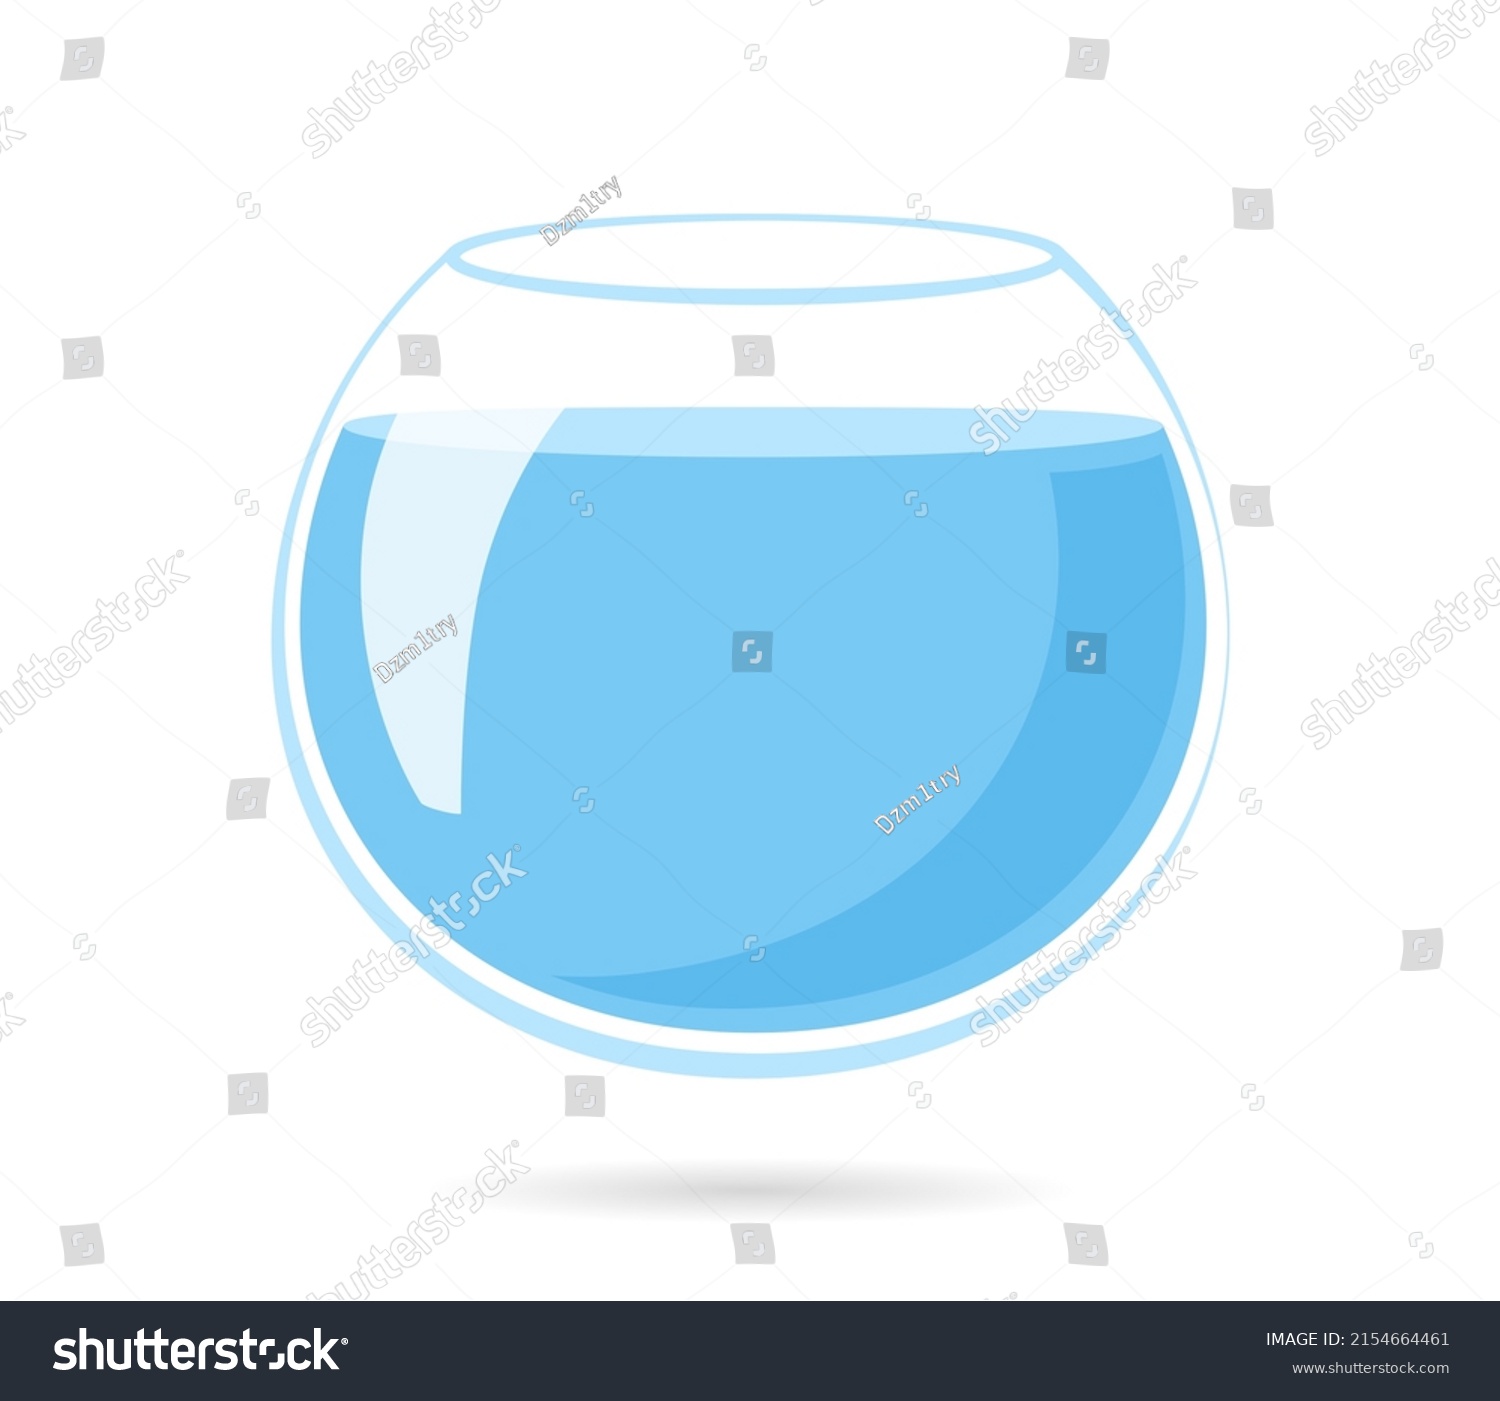 Empty cartoon fishbowl icon. Clipart image - Royalty Free Stock Vector ...